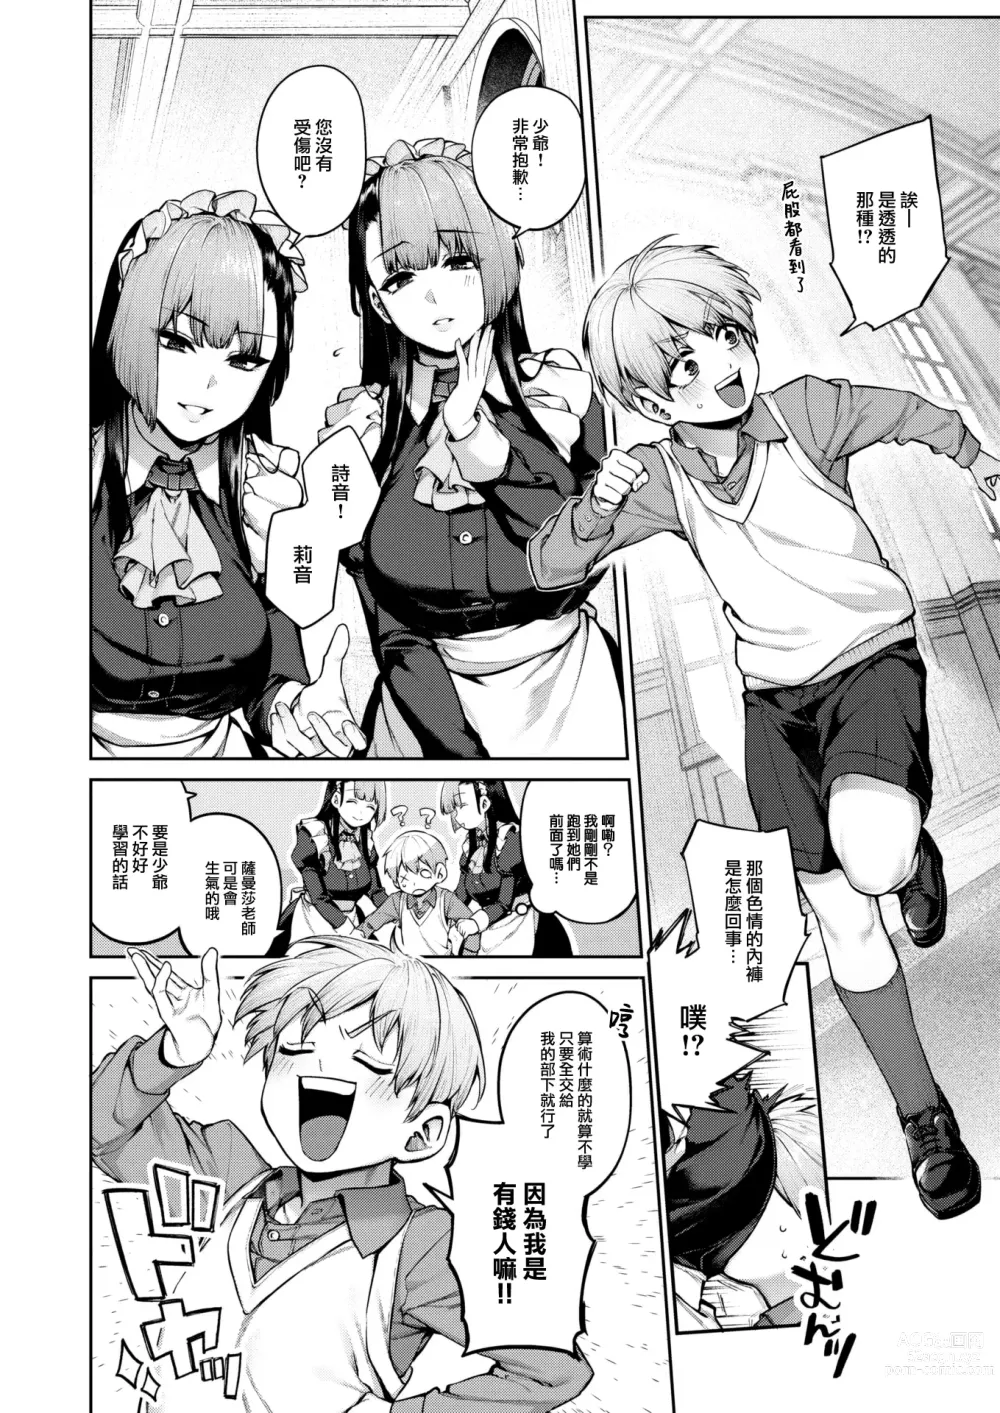 Page 3 of manga Order·Maid!